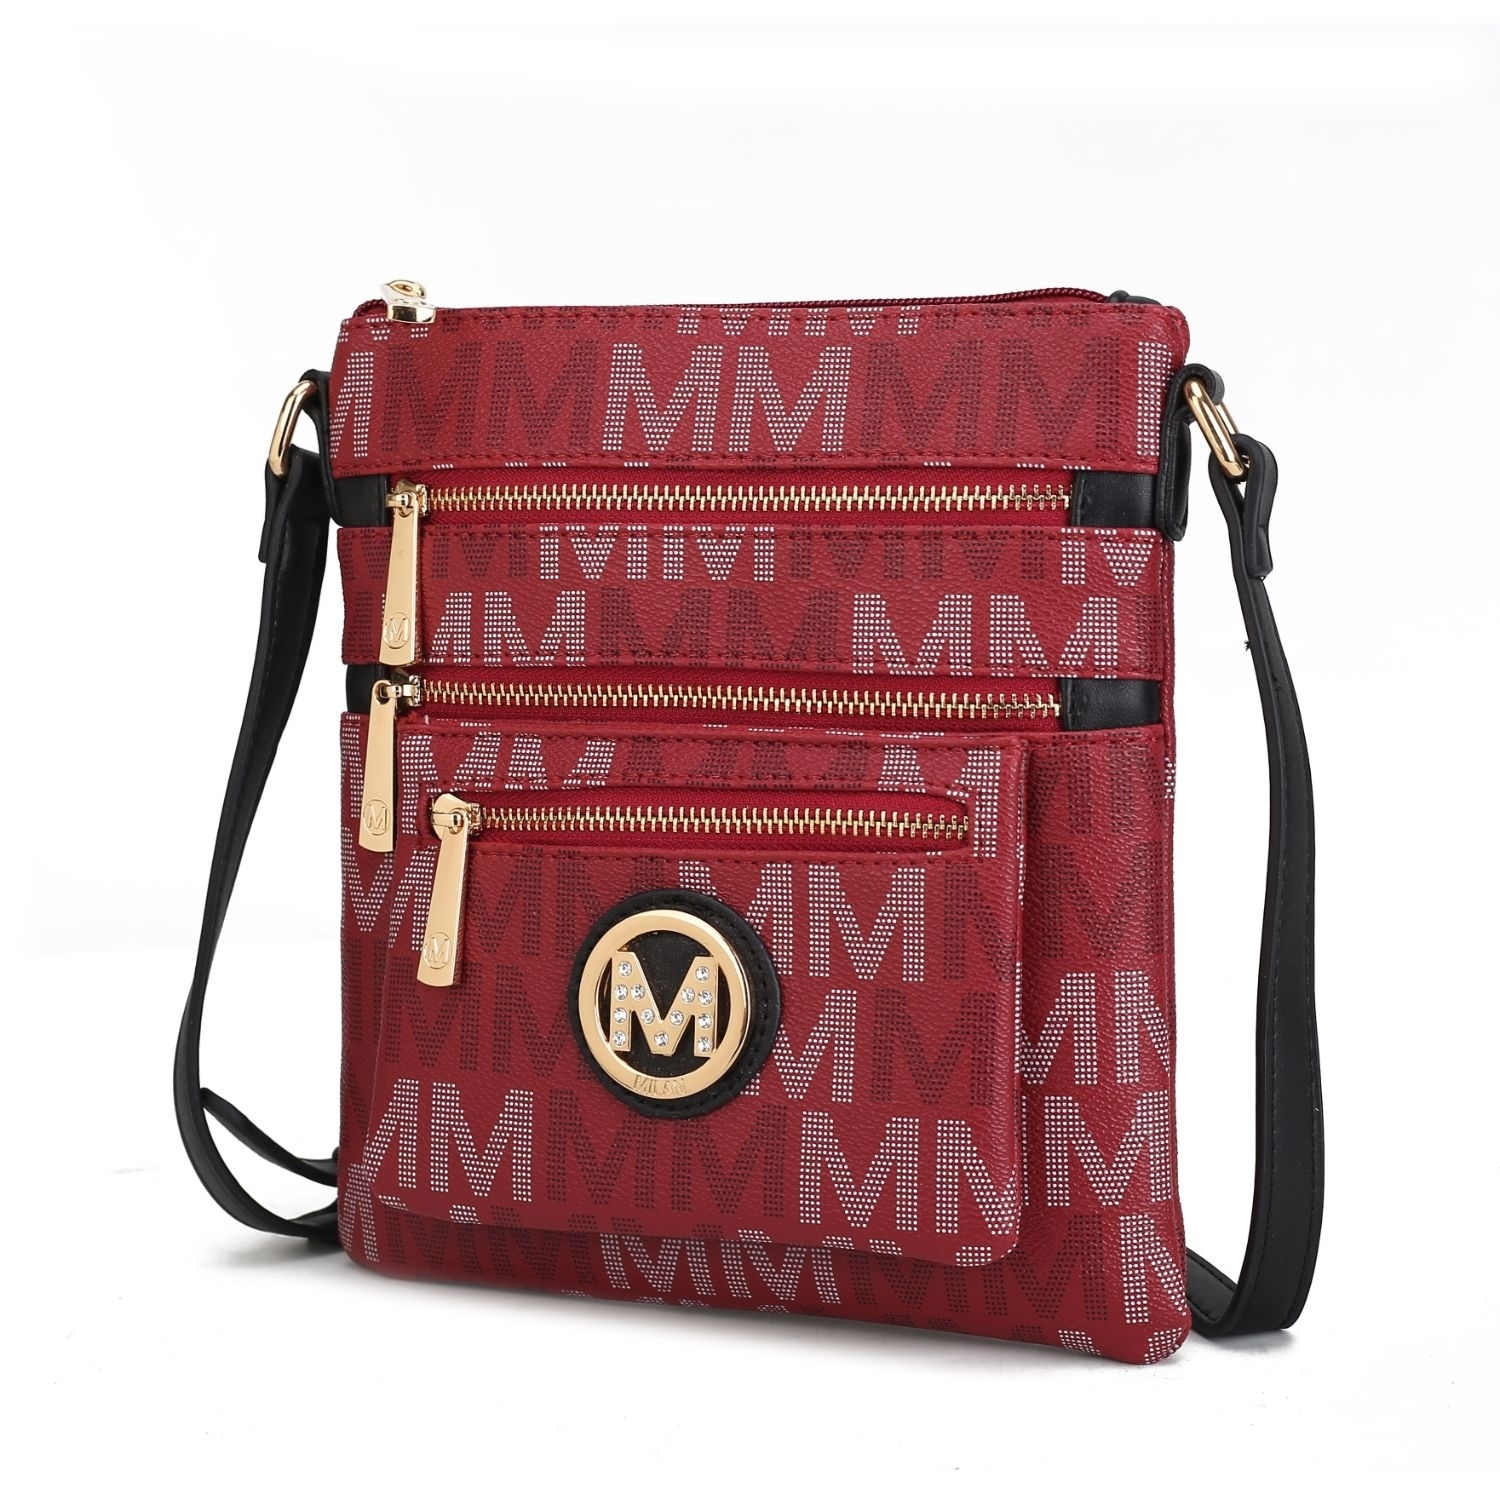 MKF Collection Beatrice M Signature Multi Compartments Crossbody Handbag By Mia K. - Burgundy